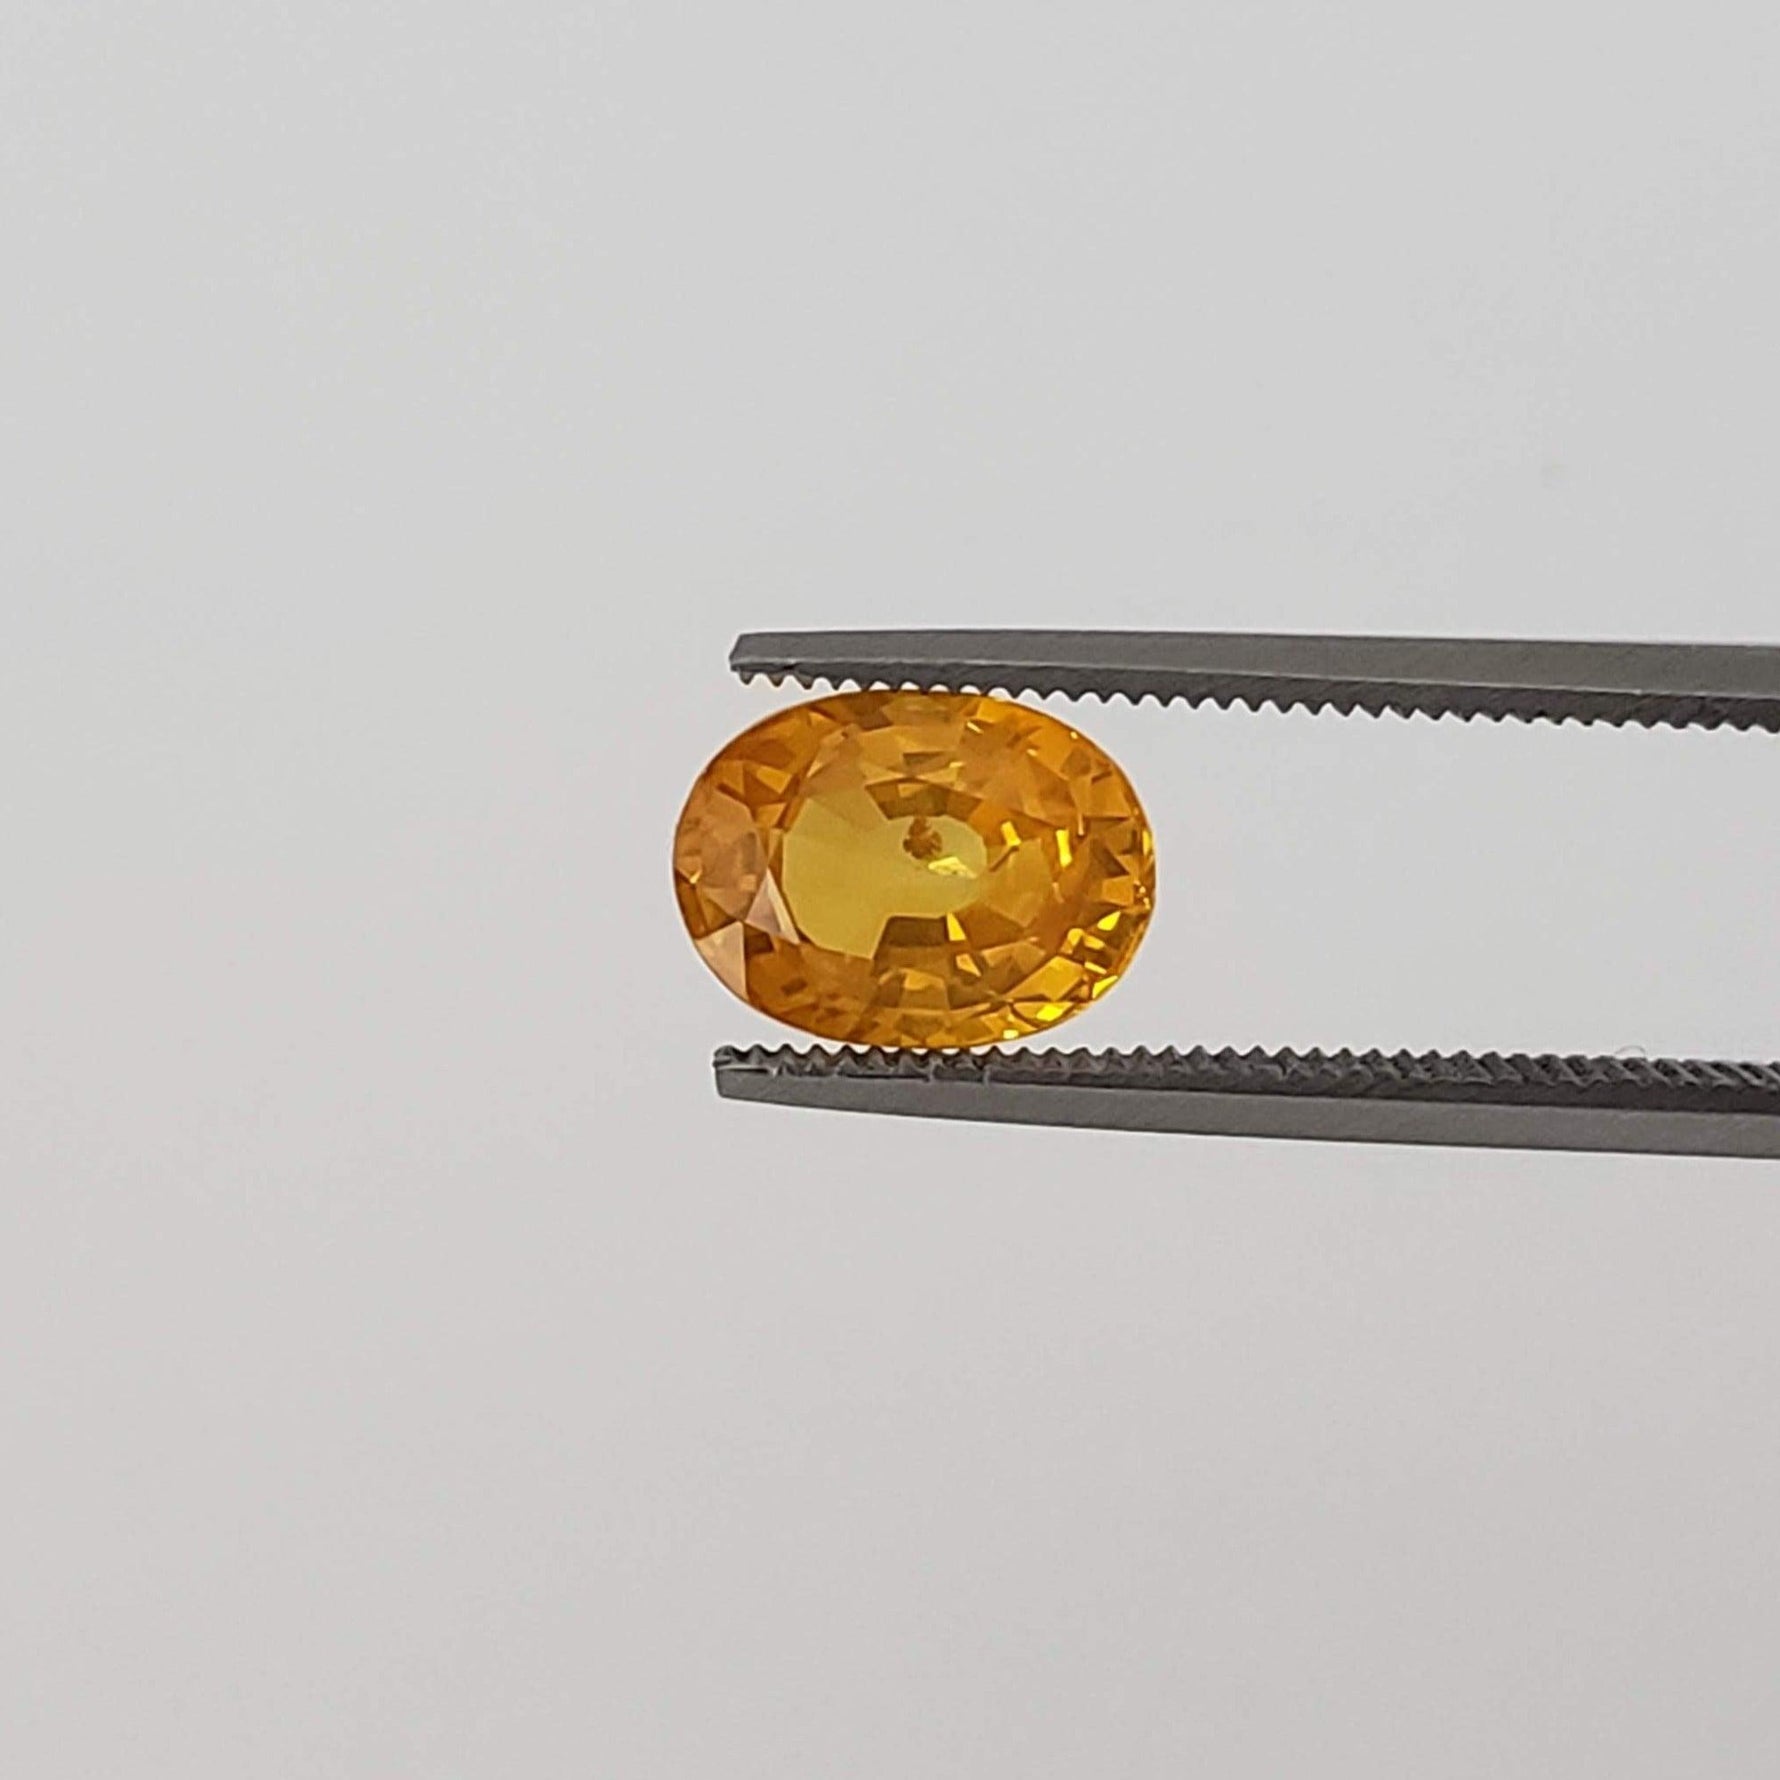 Sapphire | Oval Cut | Top Vibrant Yellow Golden | 8.6x6.4mm 2.14ct | Sri Lanka